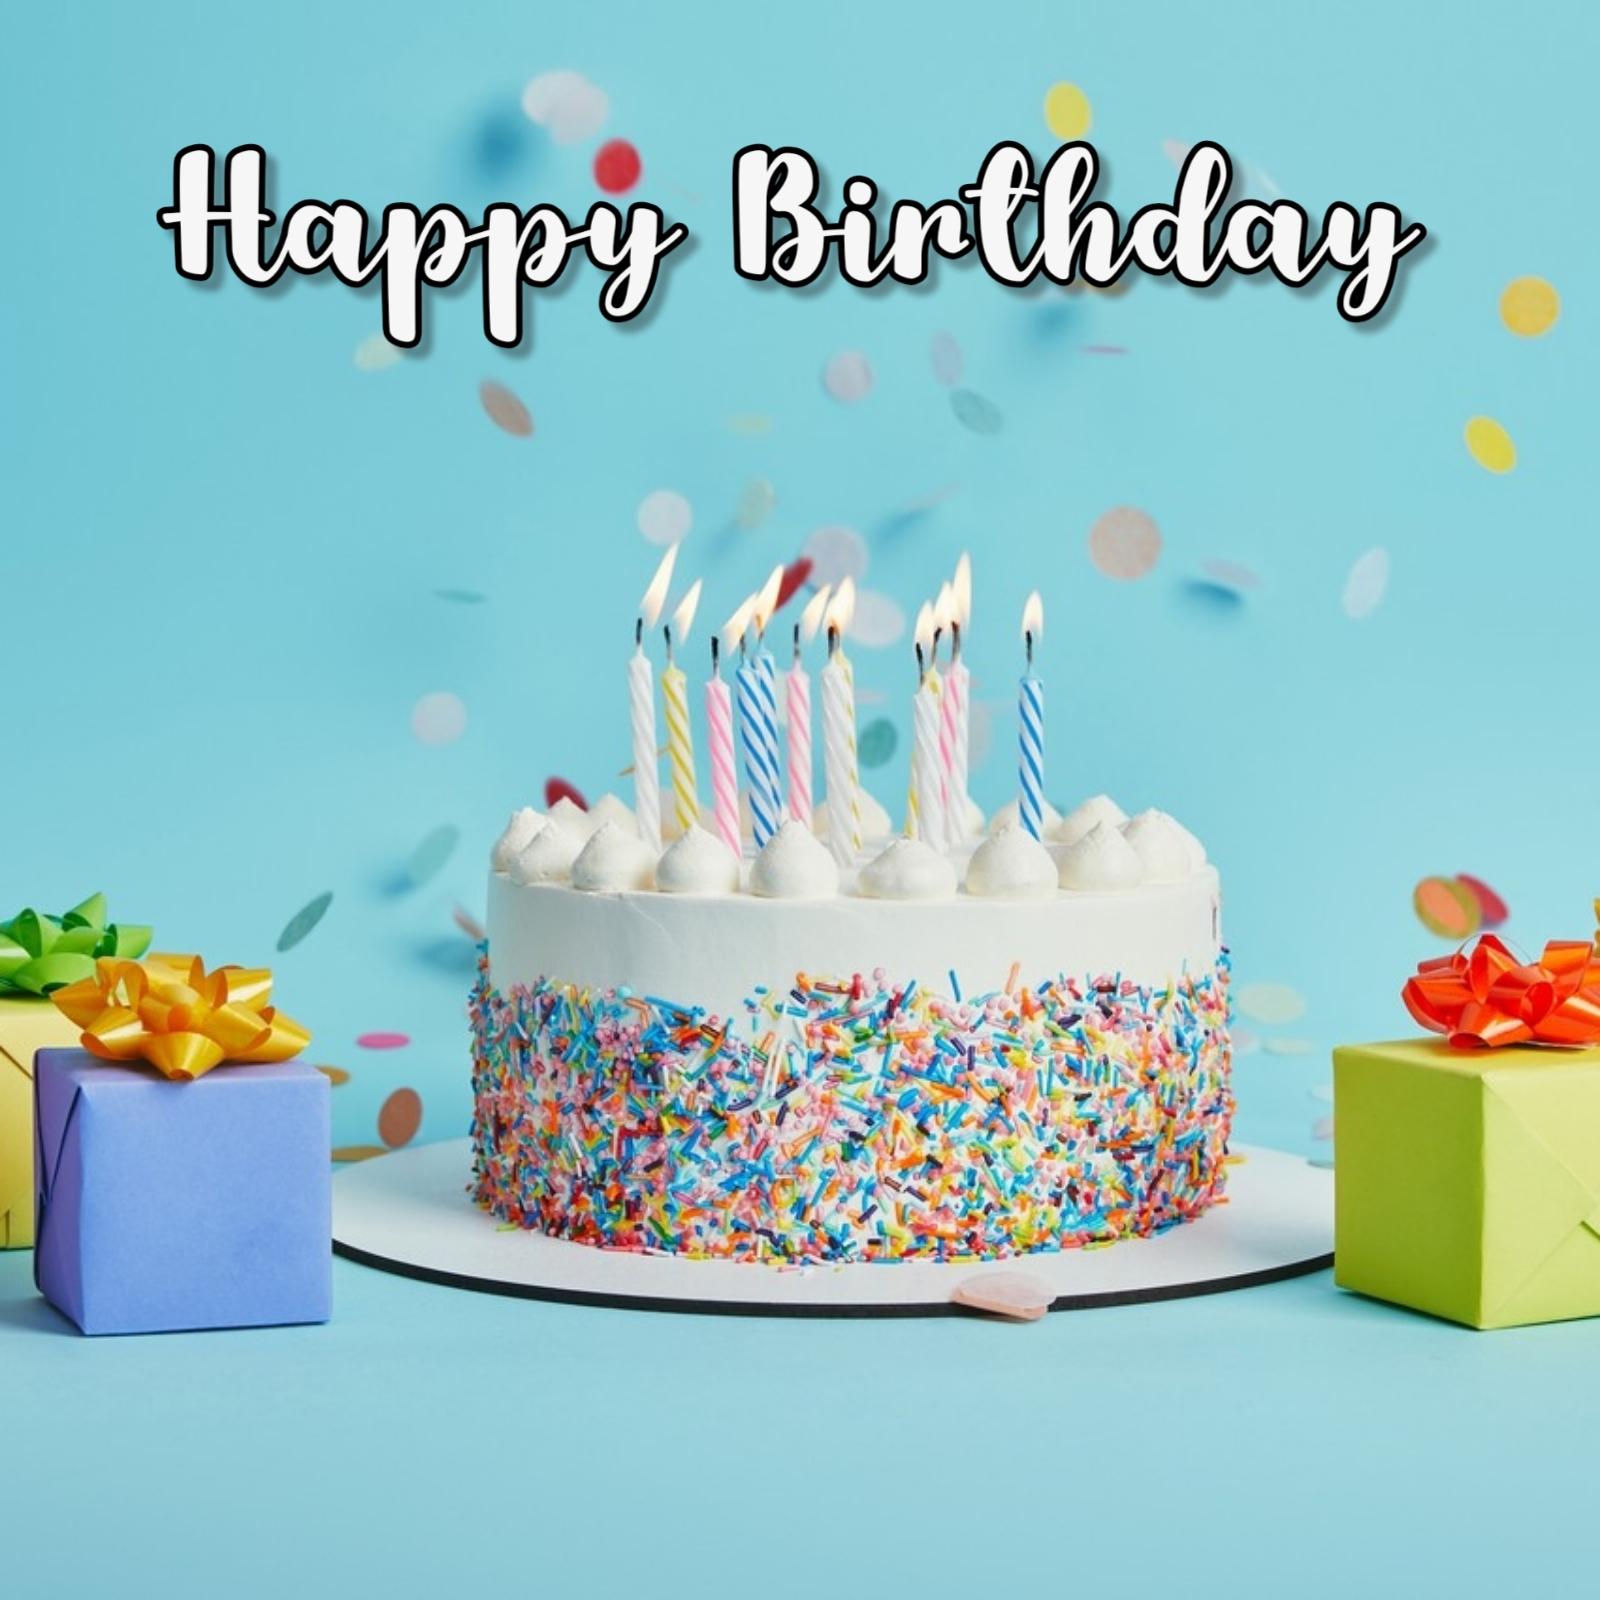 27+ Beautiful Image of Happy Birthday Cake With Name - davemelillo.com |  Happy birthday cake pictures, Happy birthday cake images, Birthday cake  write name